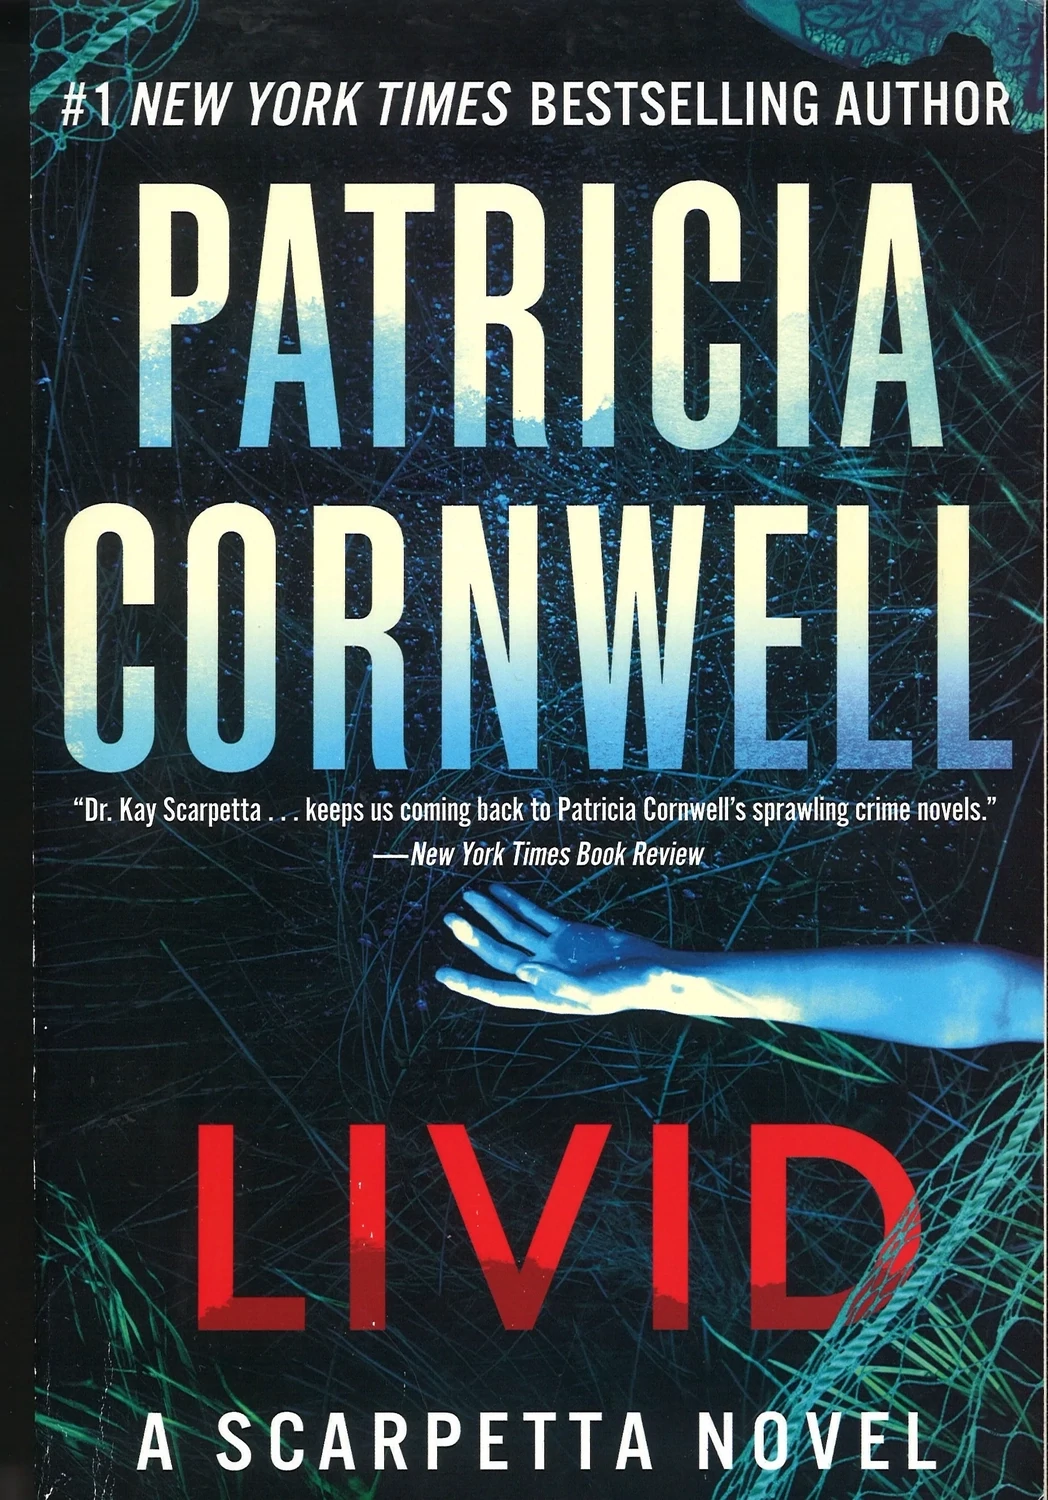 Livid: A Scarpetta Novel by Patricia Cornwell